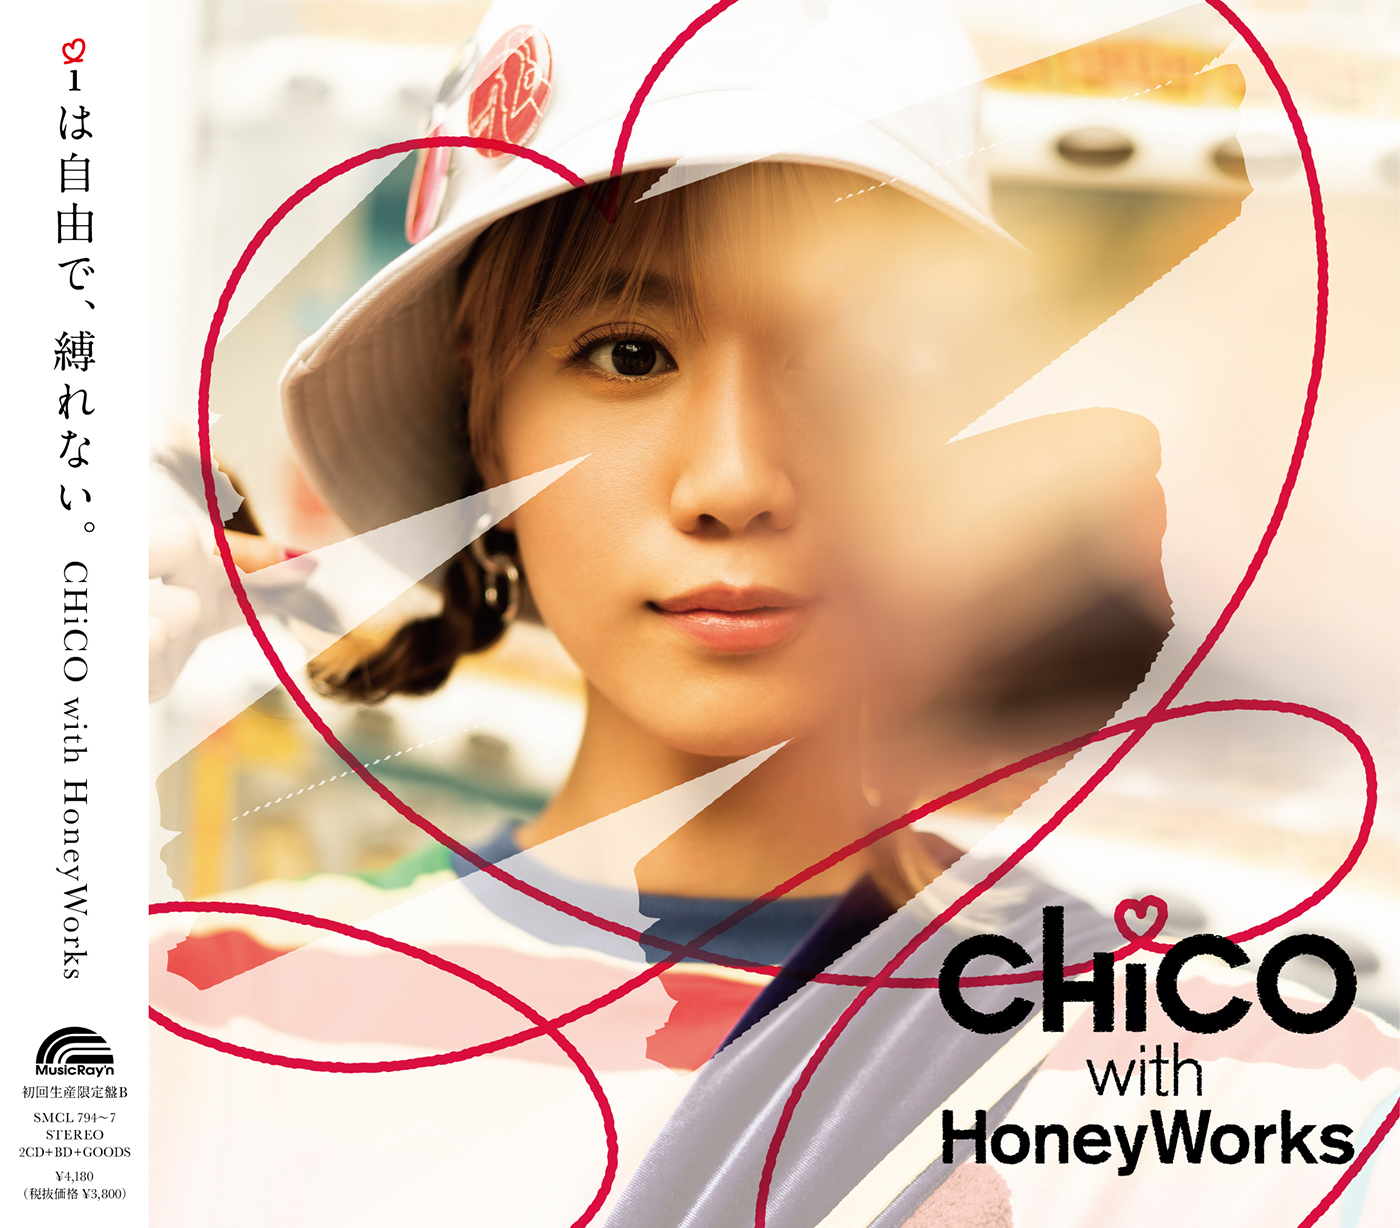 CHiCO with HoneyWorks　縛られない自由な歌い方、楽曲のジャンルや世界観が広がったニューアルバムから感じるチコハニの2年の成長 - 画像一覧（2/10）